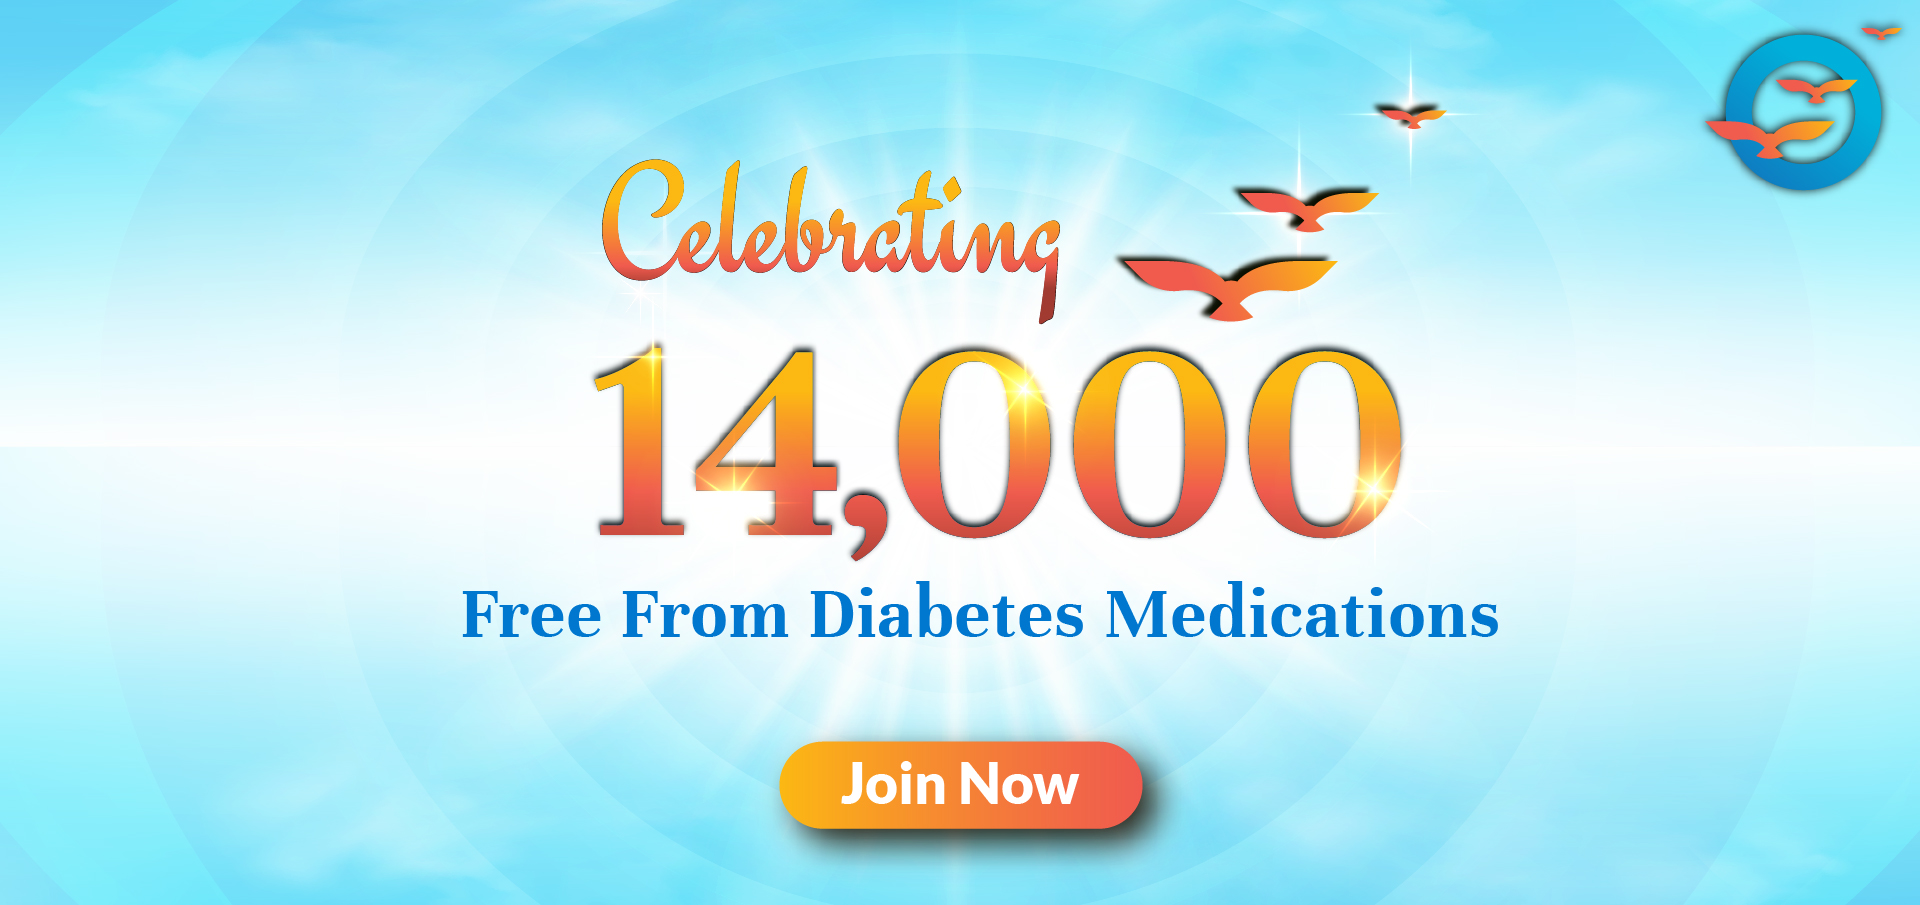 Celebrating 14000 free from diabetes medications